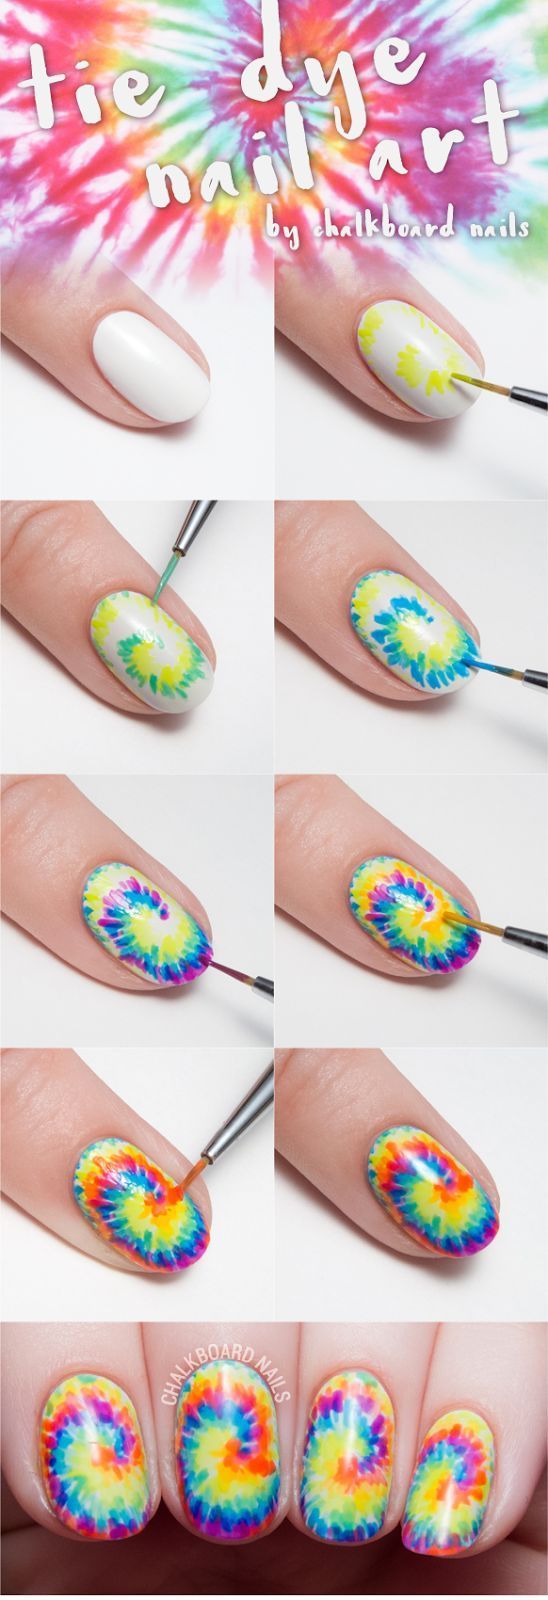 Tie dye nail art tutorial by @Chalkboard Nails – Fun DIY!